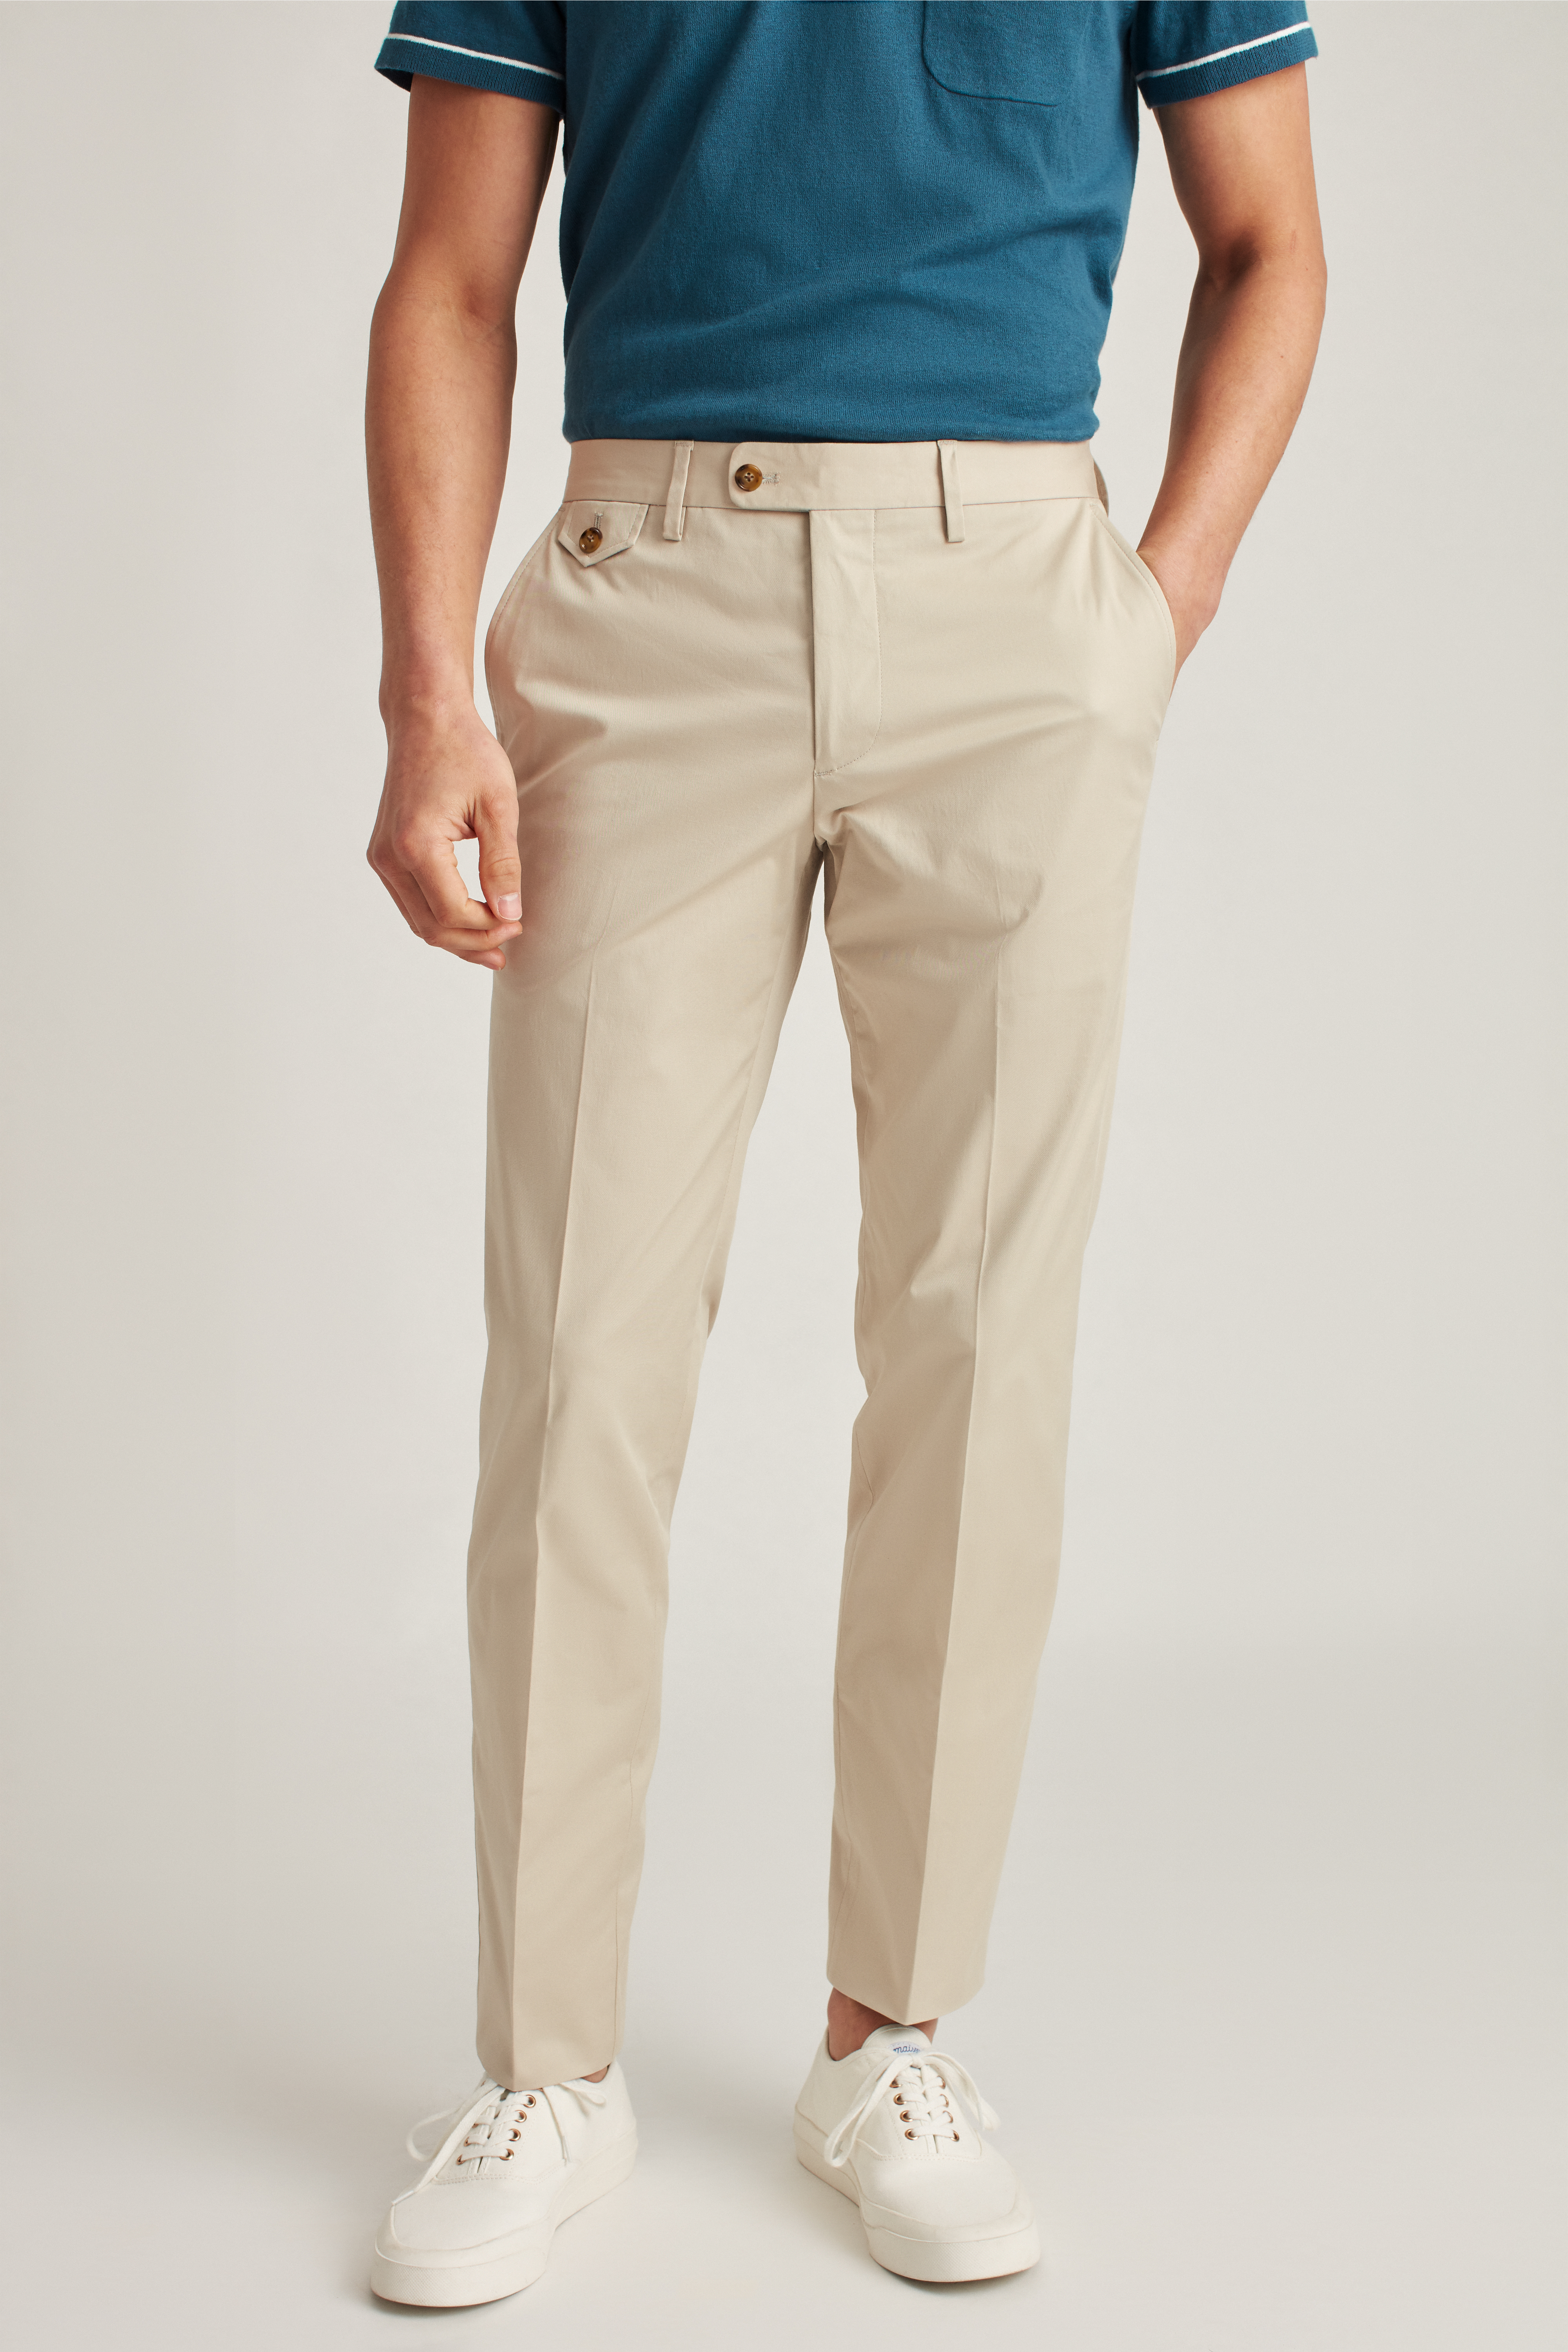 Men pants B700 stretch cotton slim fit in five colors online Italian  clothing sale